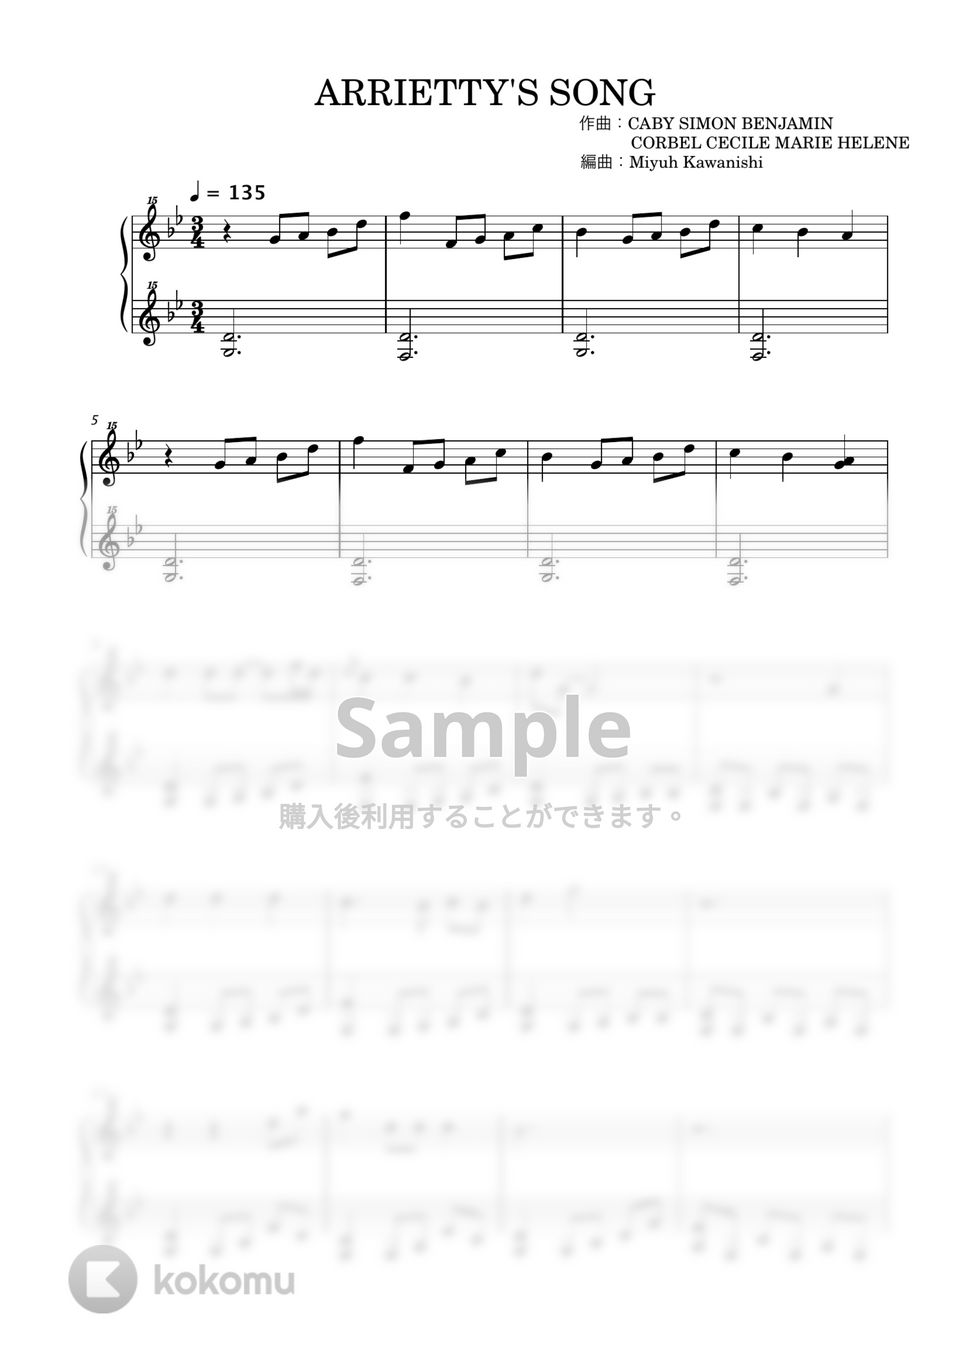 CORBEL CECILE MARIE HELENE - Arrietty's Song (トイピアノ / 32鍵盤 / 借りぐらしのアリエッティ / ジブリ) by 川西三裕